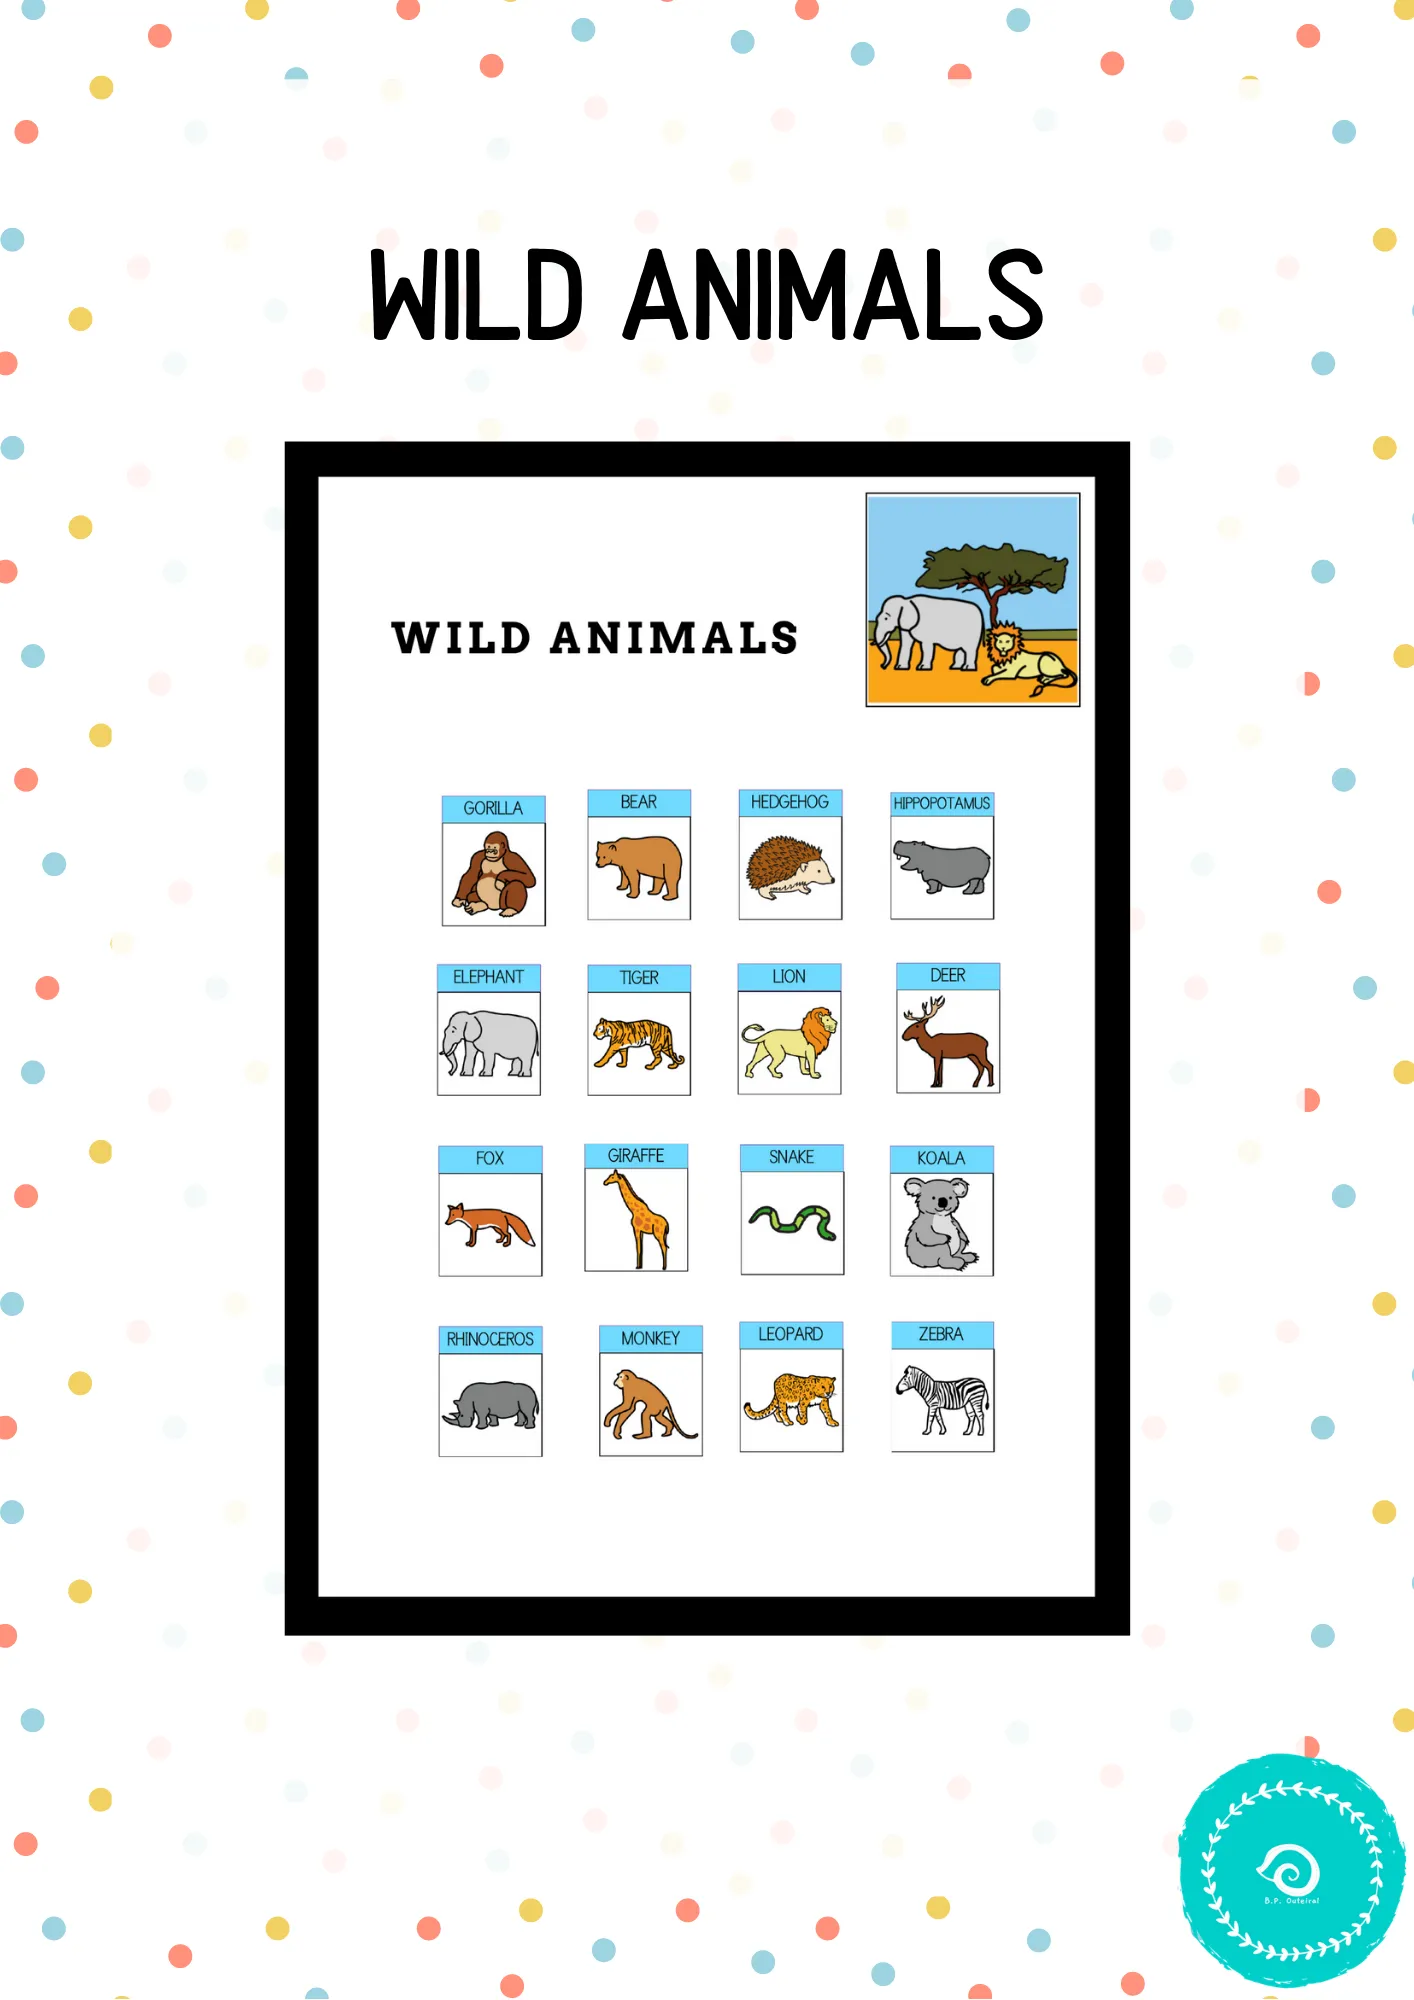 Wild animals (pictos)